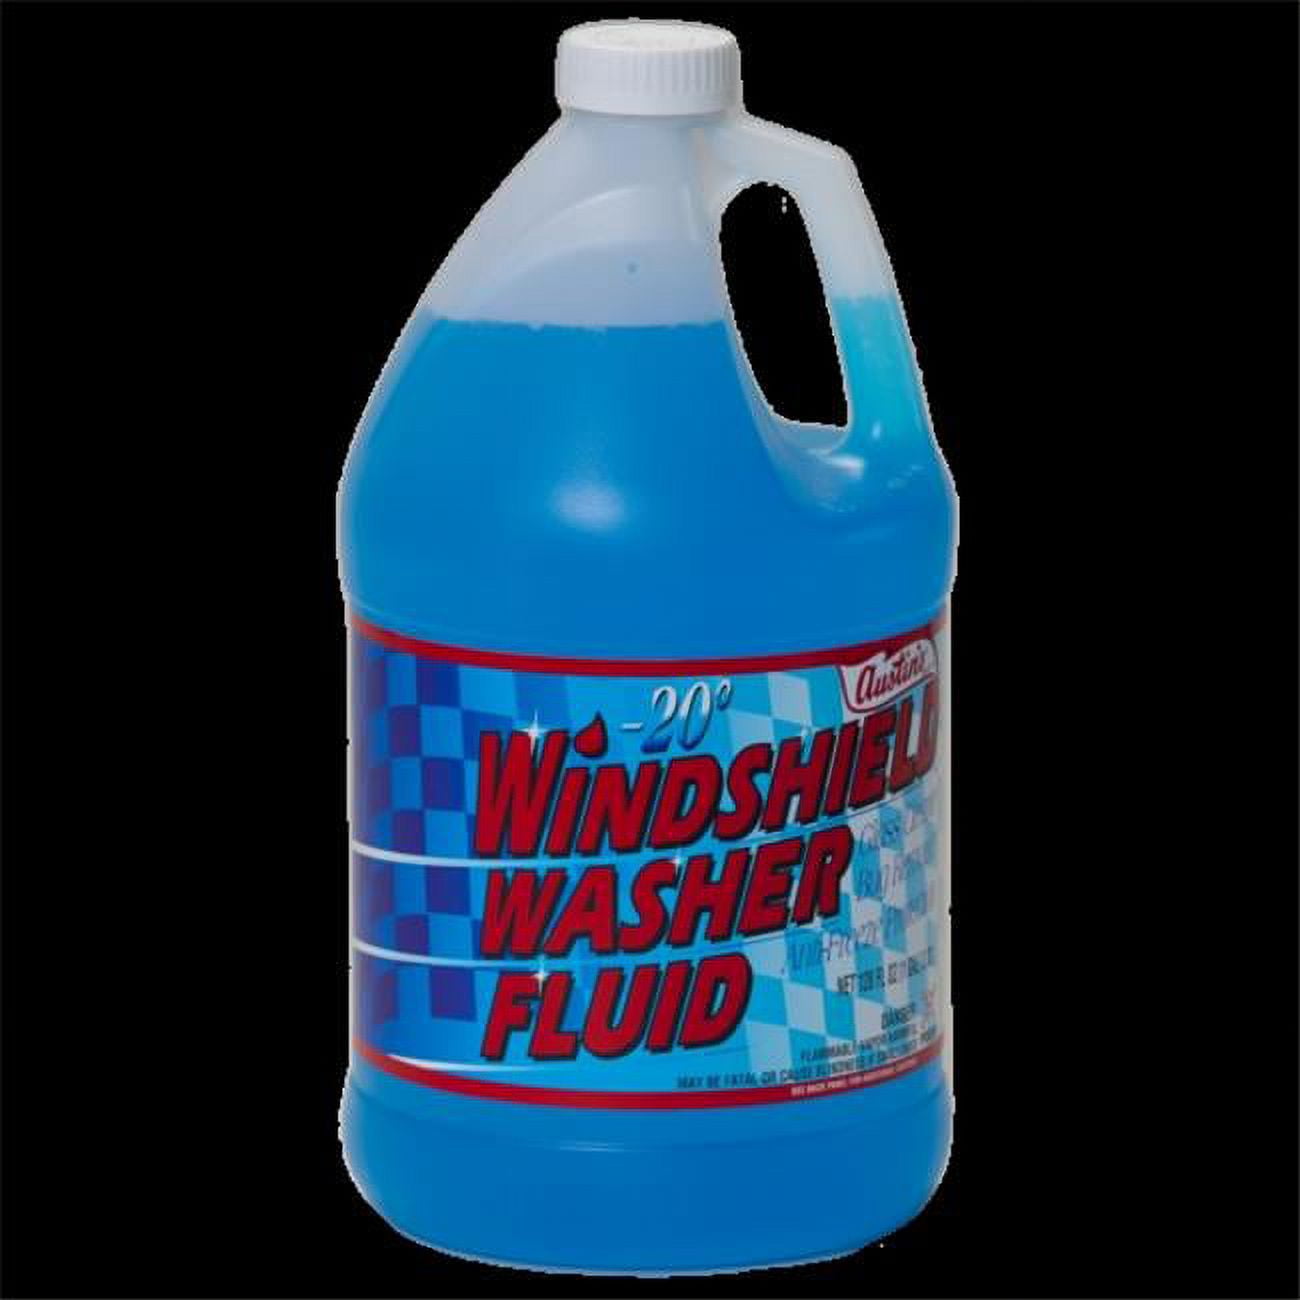 Autoshield Windshield Washer Fluid with De-Icer (6 pk., 1-gal. bottles) -  Sam's Club